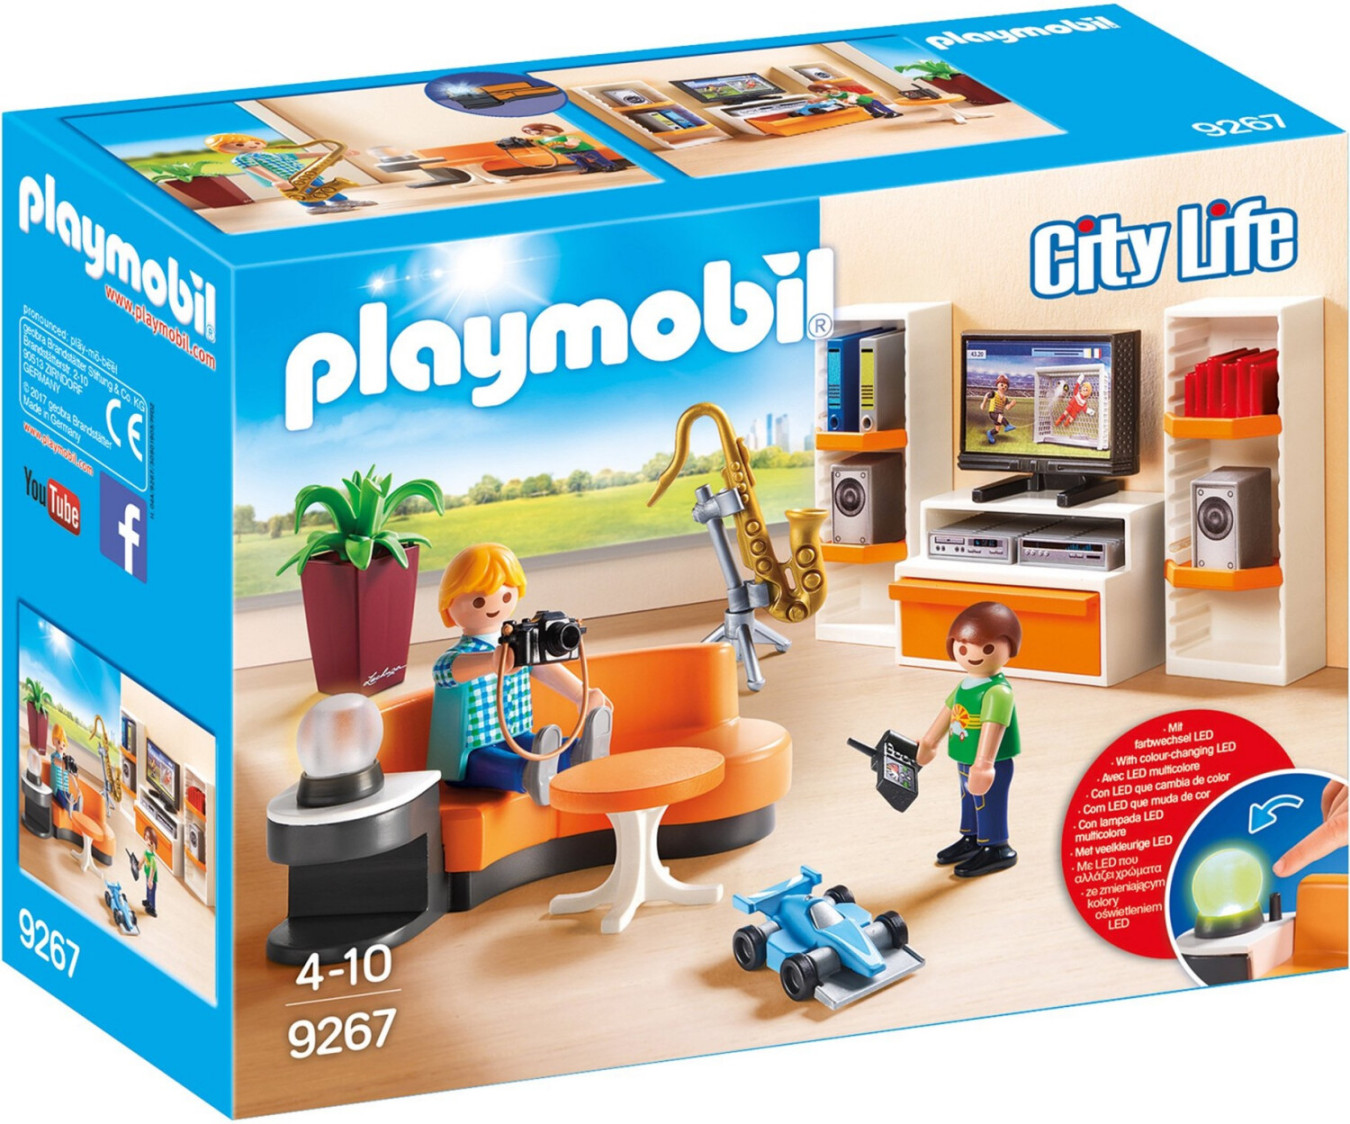 Playmobil City Life - Wohnzimmer () ab ,